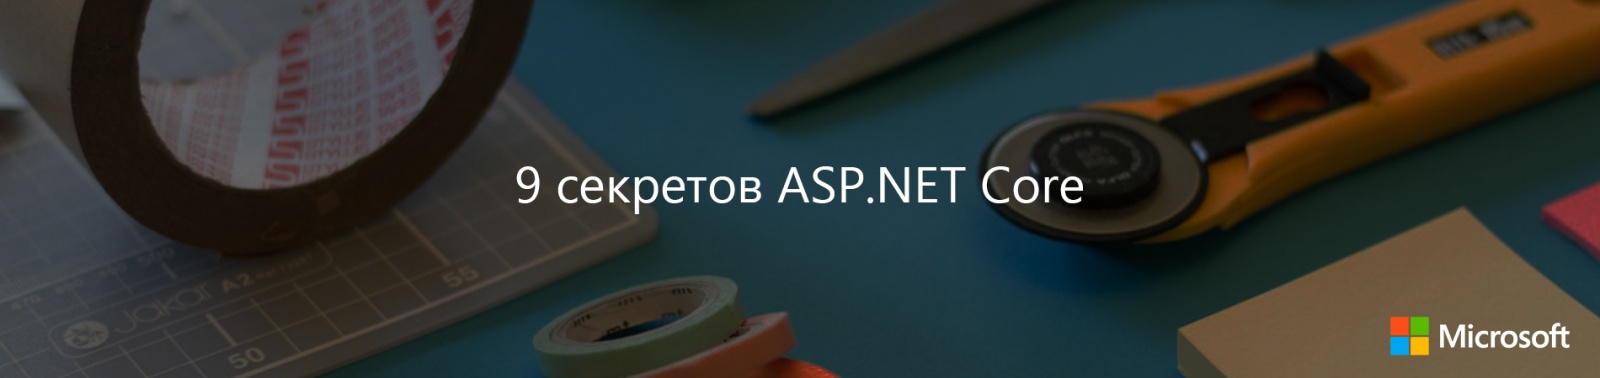 9 секретов ASP.NET Core - 1